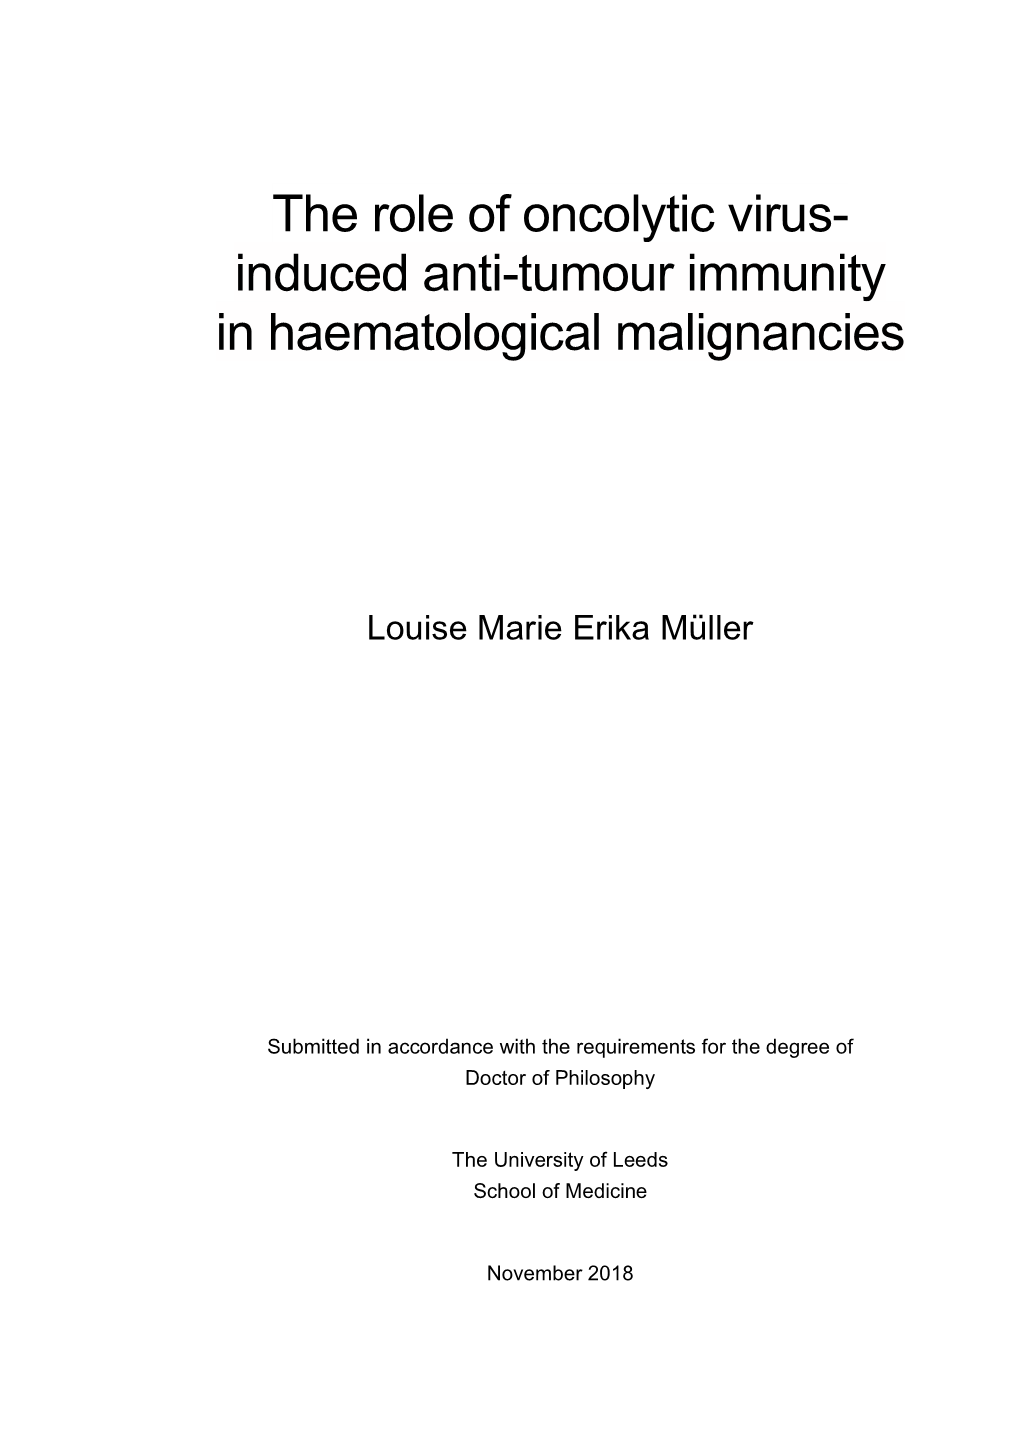 Induced Anti-Tumour Immunity in Haematological Malignancies